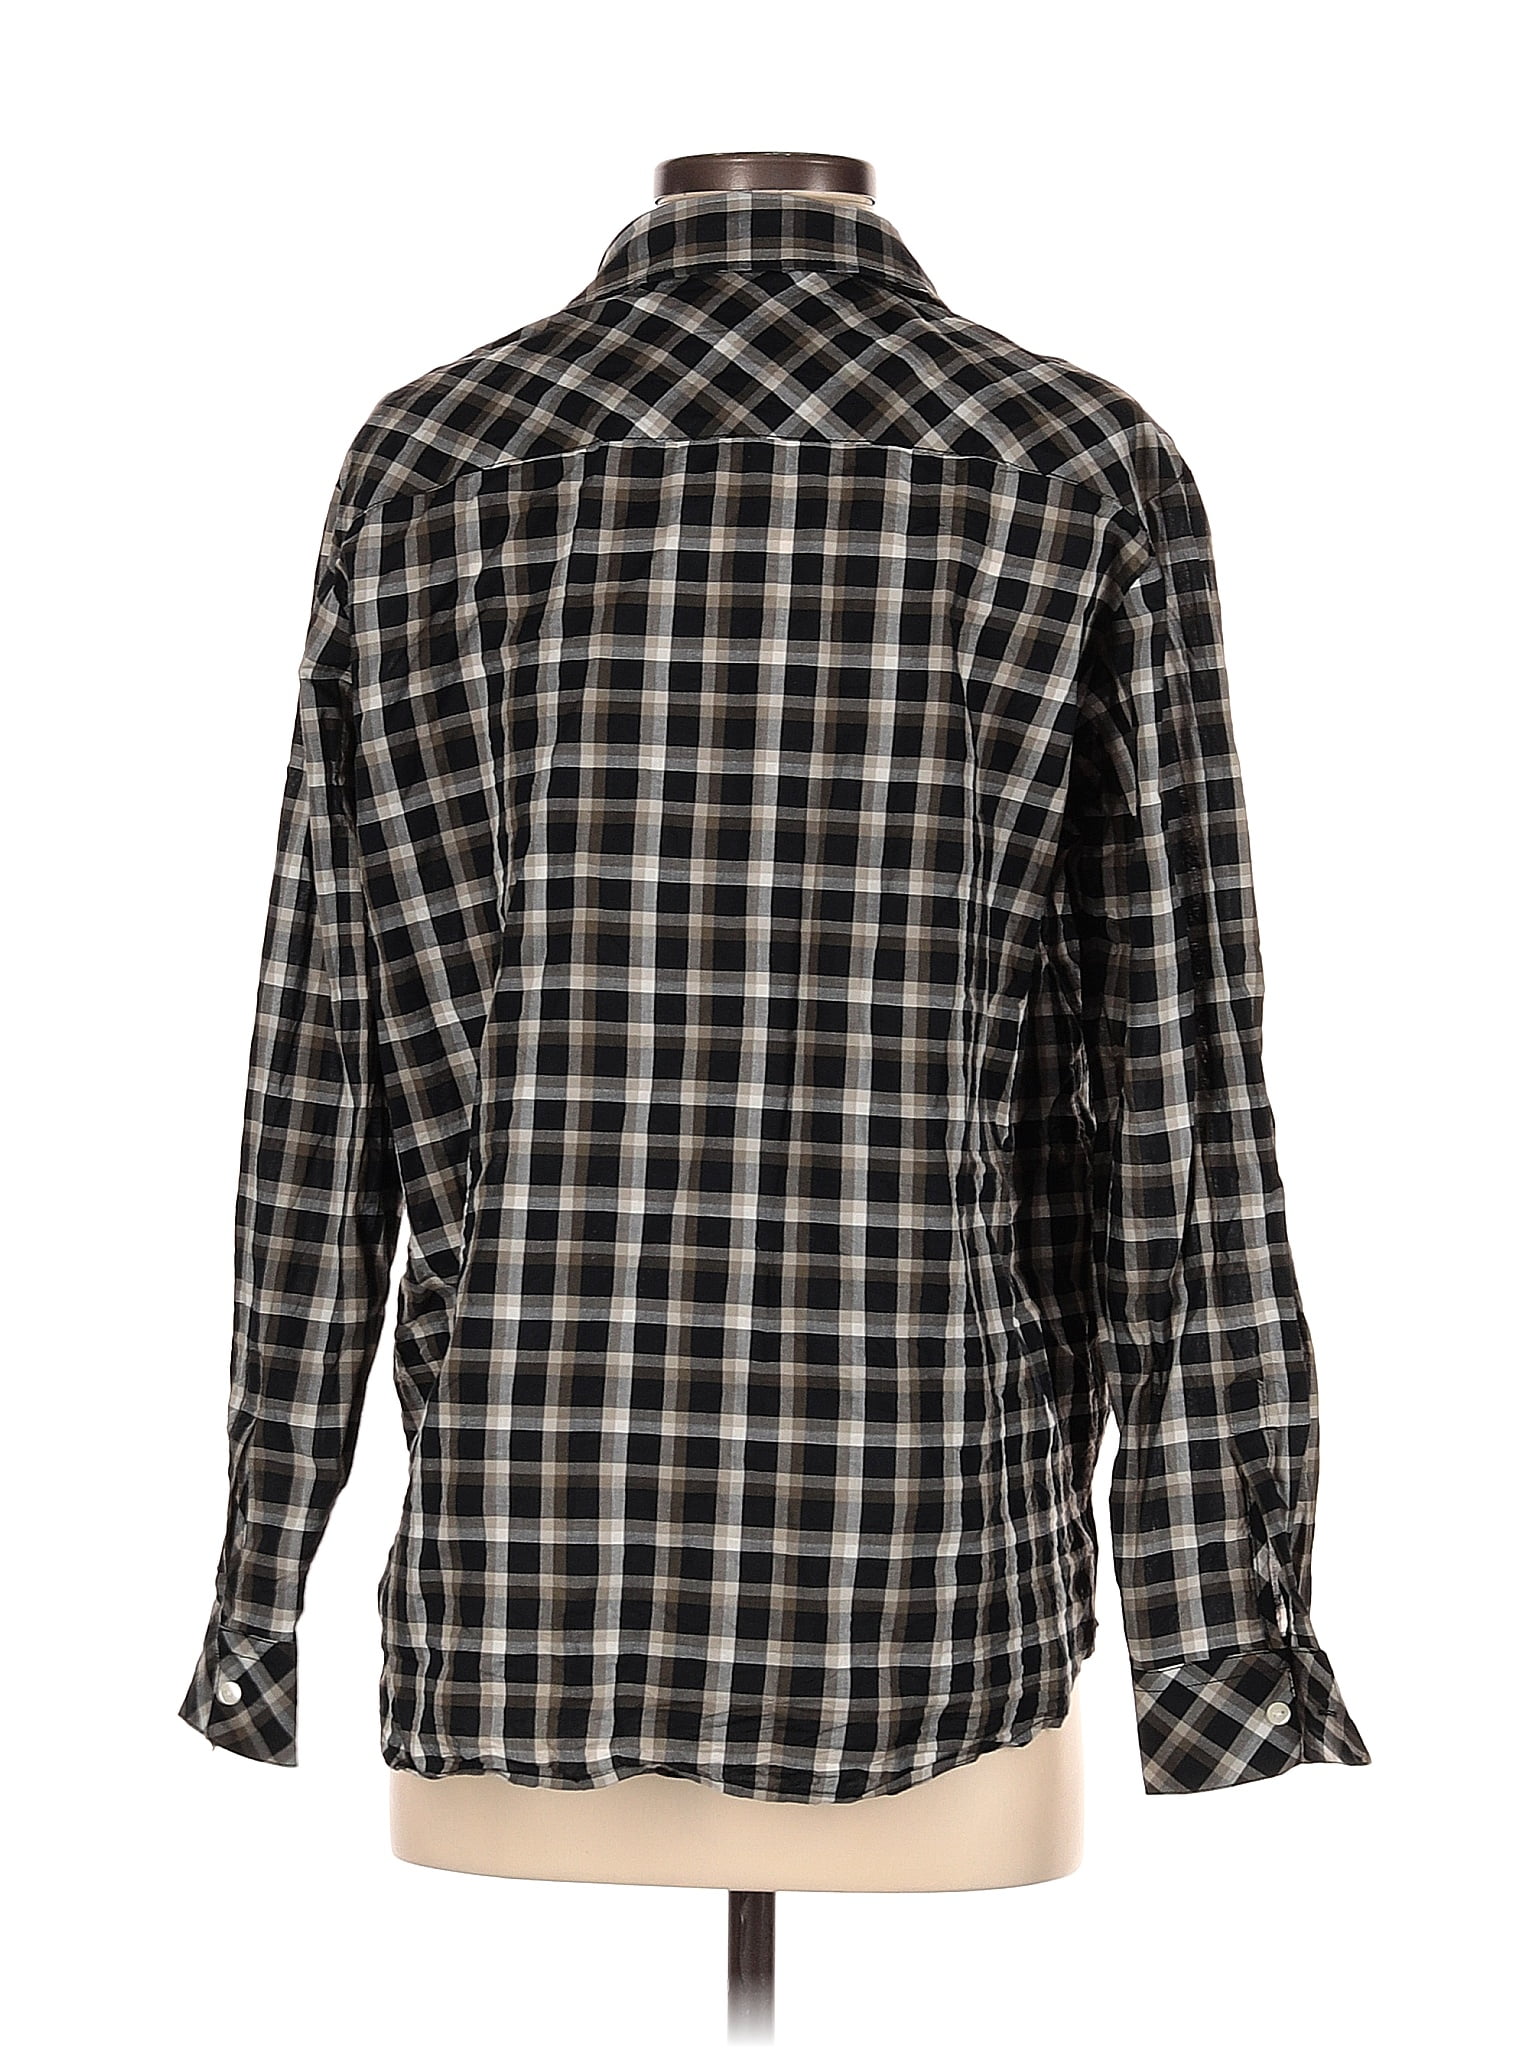 Lucky Brand 100% Cotton Plaid Gray Long Sleeve Button-Down Shirt Size XL -  69% off